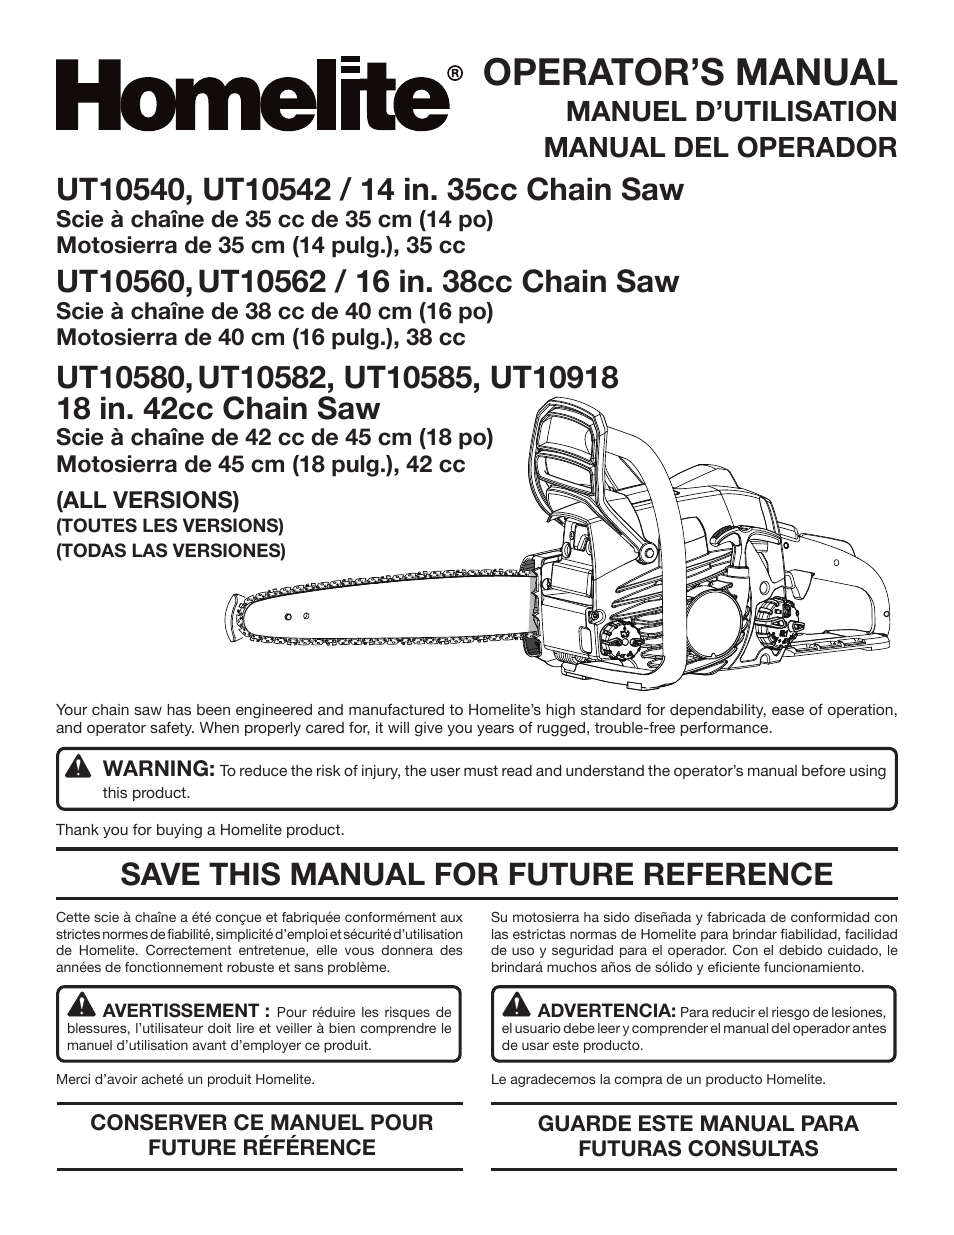 Homelite UT10585 User Manual | 124 pages